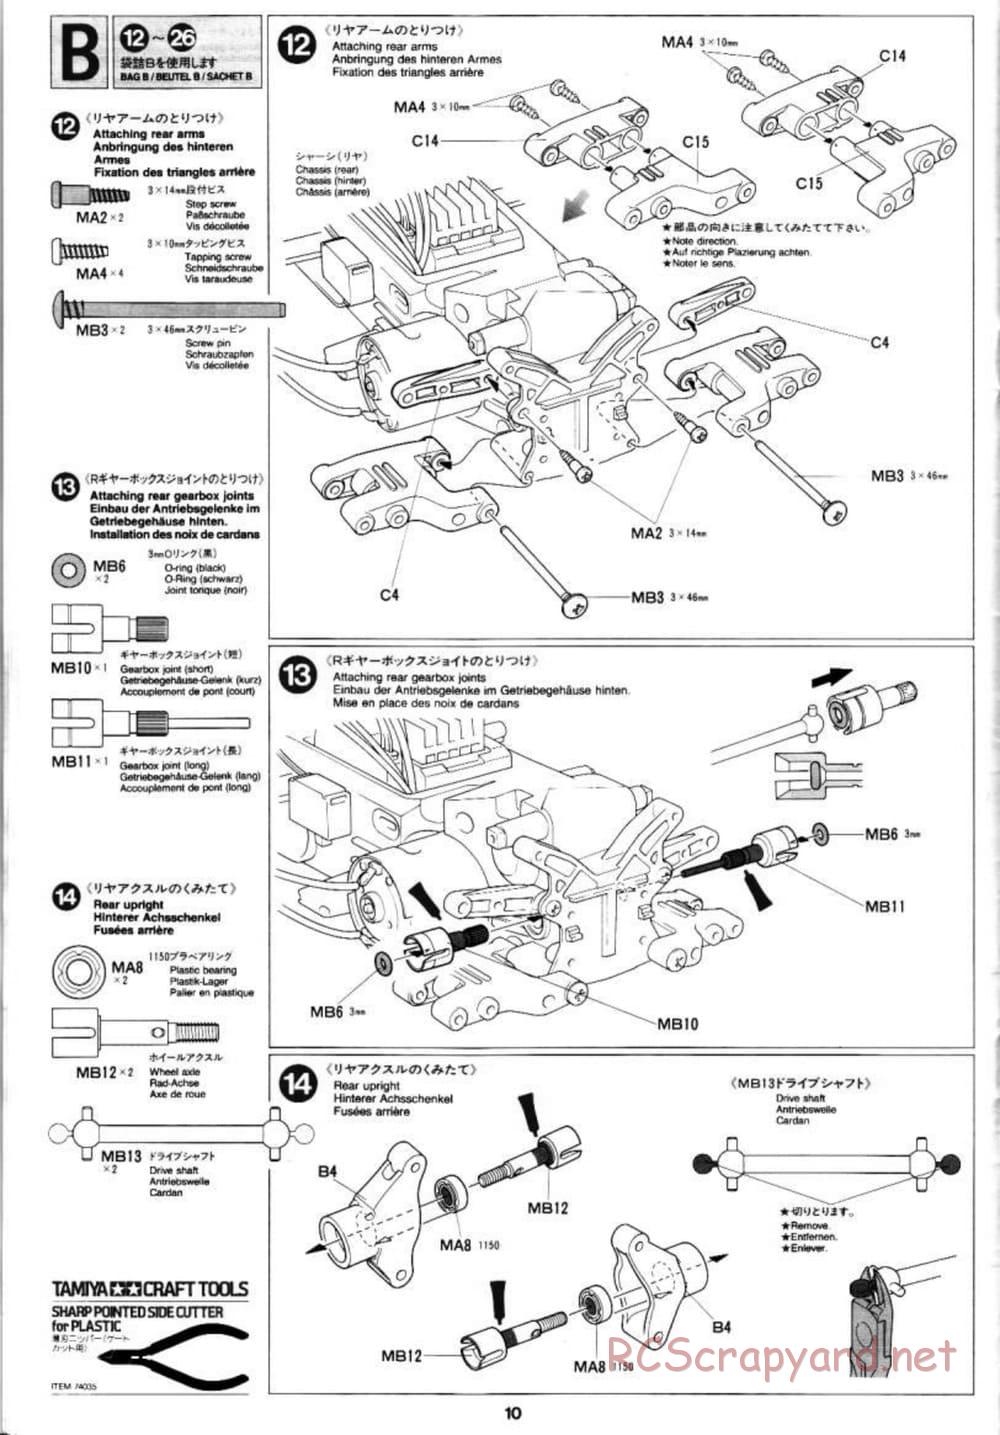 Tamiya - Peugeot 406 ST - TL-01 Chassis - Manual - Page 10